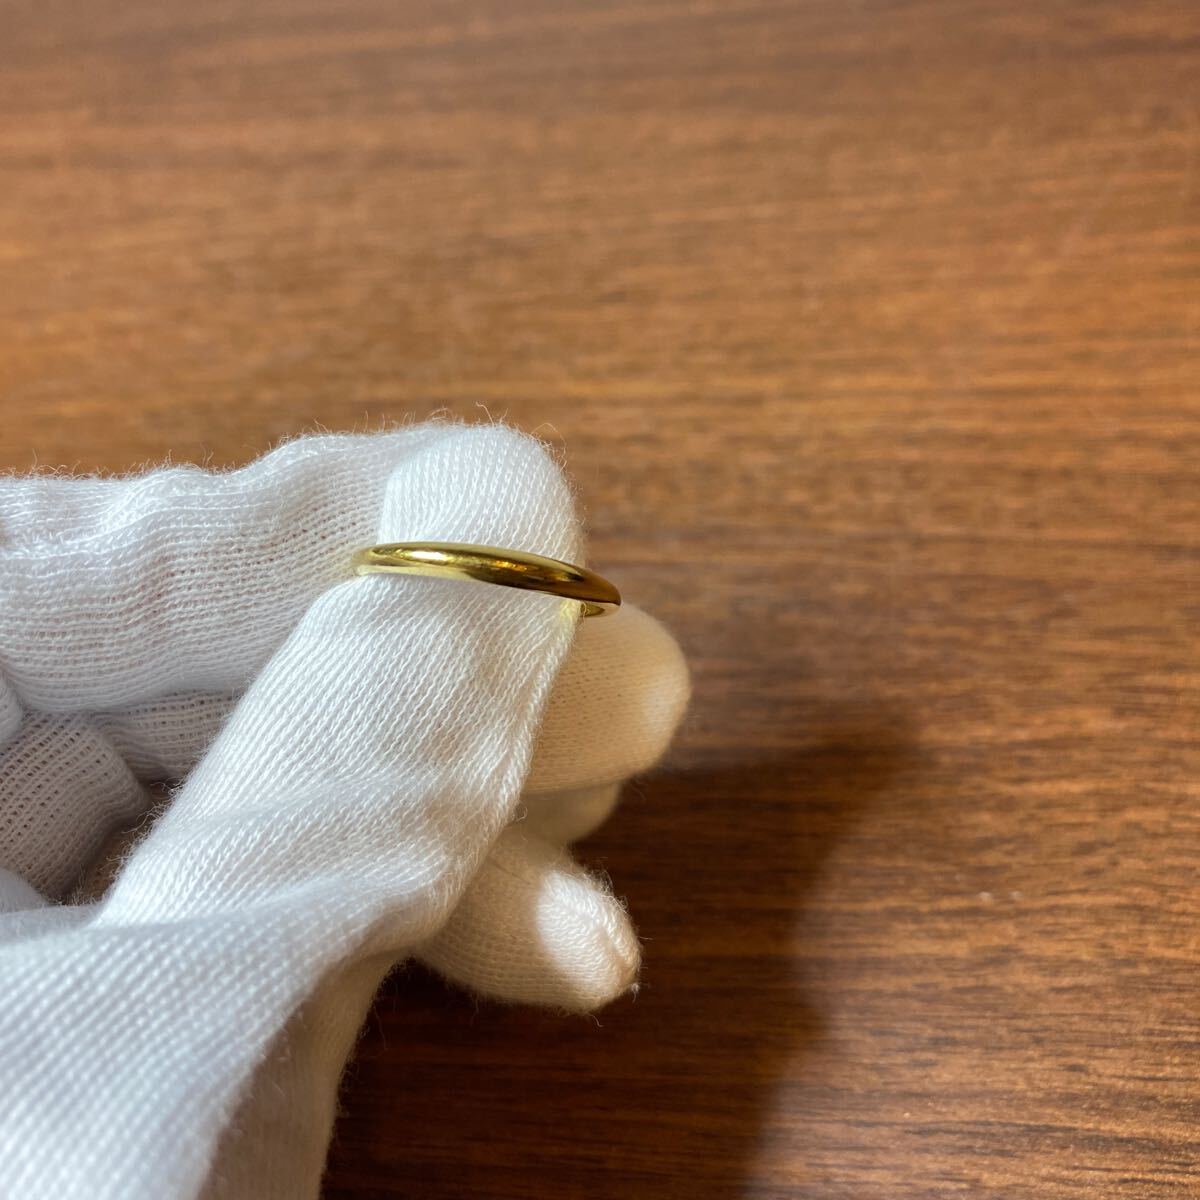 A594/[ б/у товар ]FENDI кольцо кольцо жемчуг имеется мода Fendi аксессуары Gold кольцо аксессуары FENDI Logo 